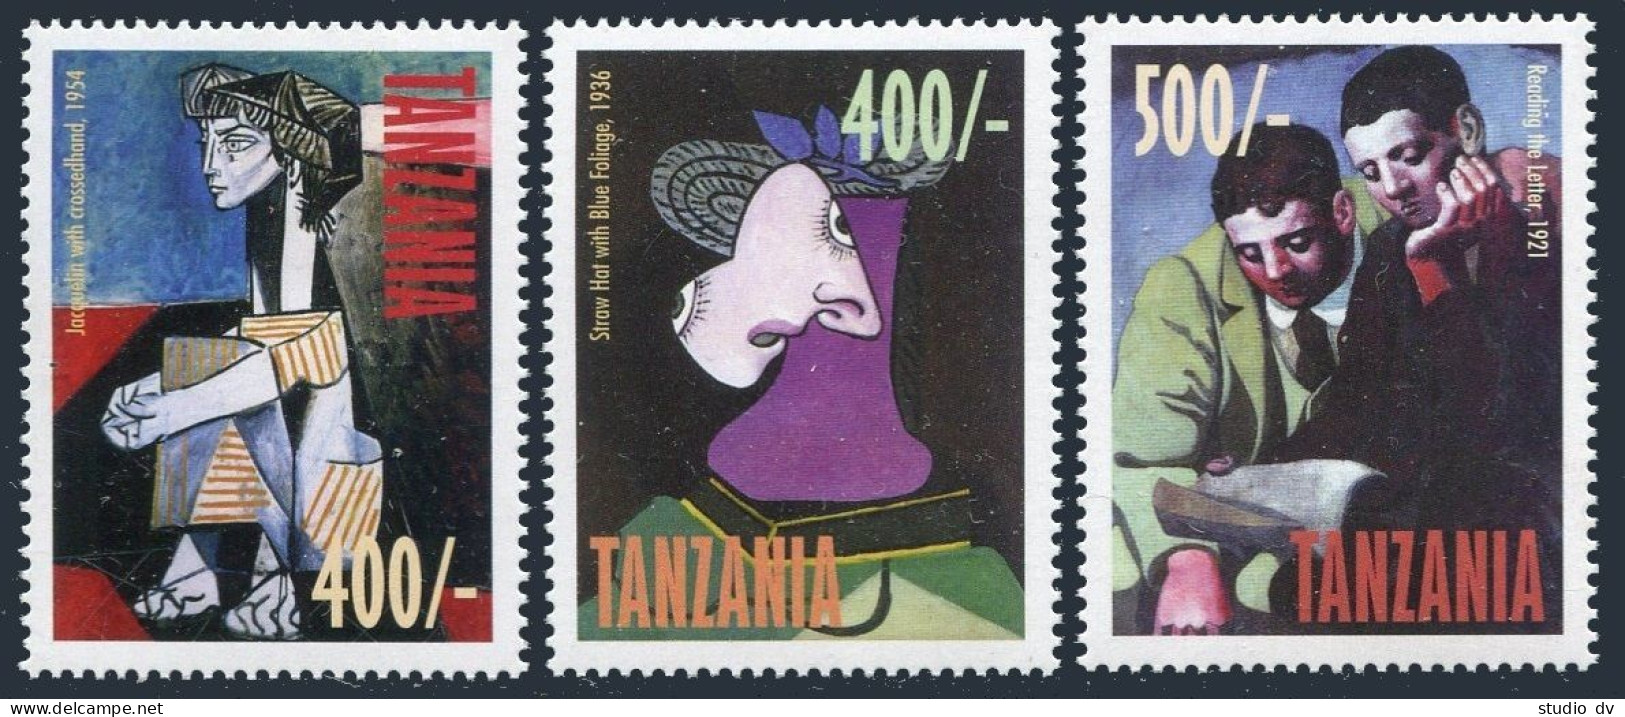 Tanzania 1759-1761, 1762 Sheet, MNH. Pablo Picasso Paintings, 1998. - Tansania (1964-...)